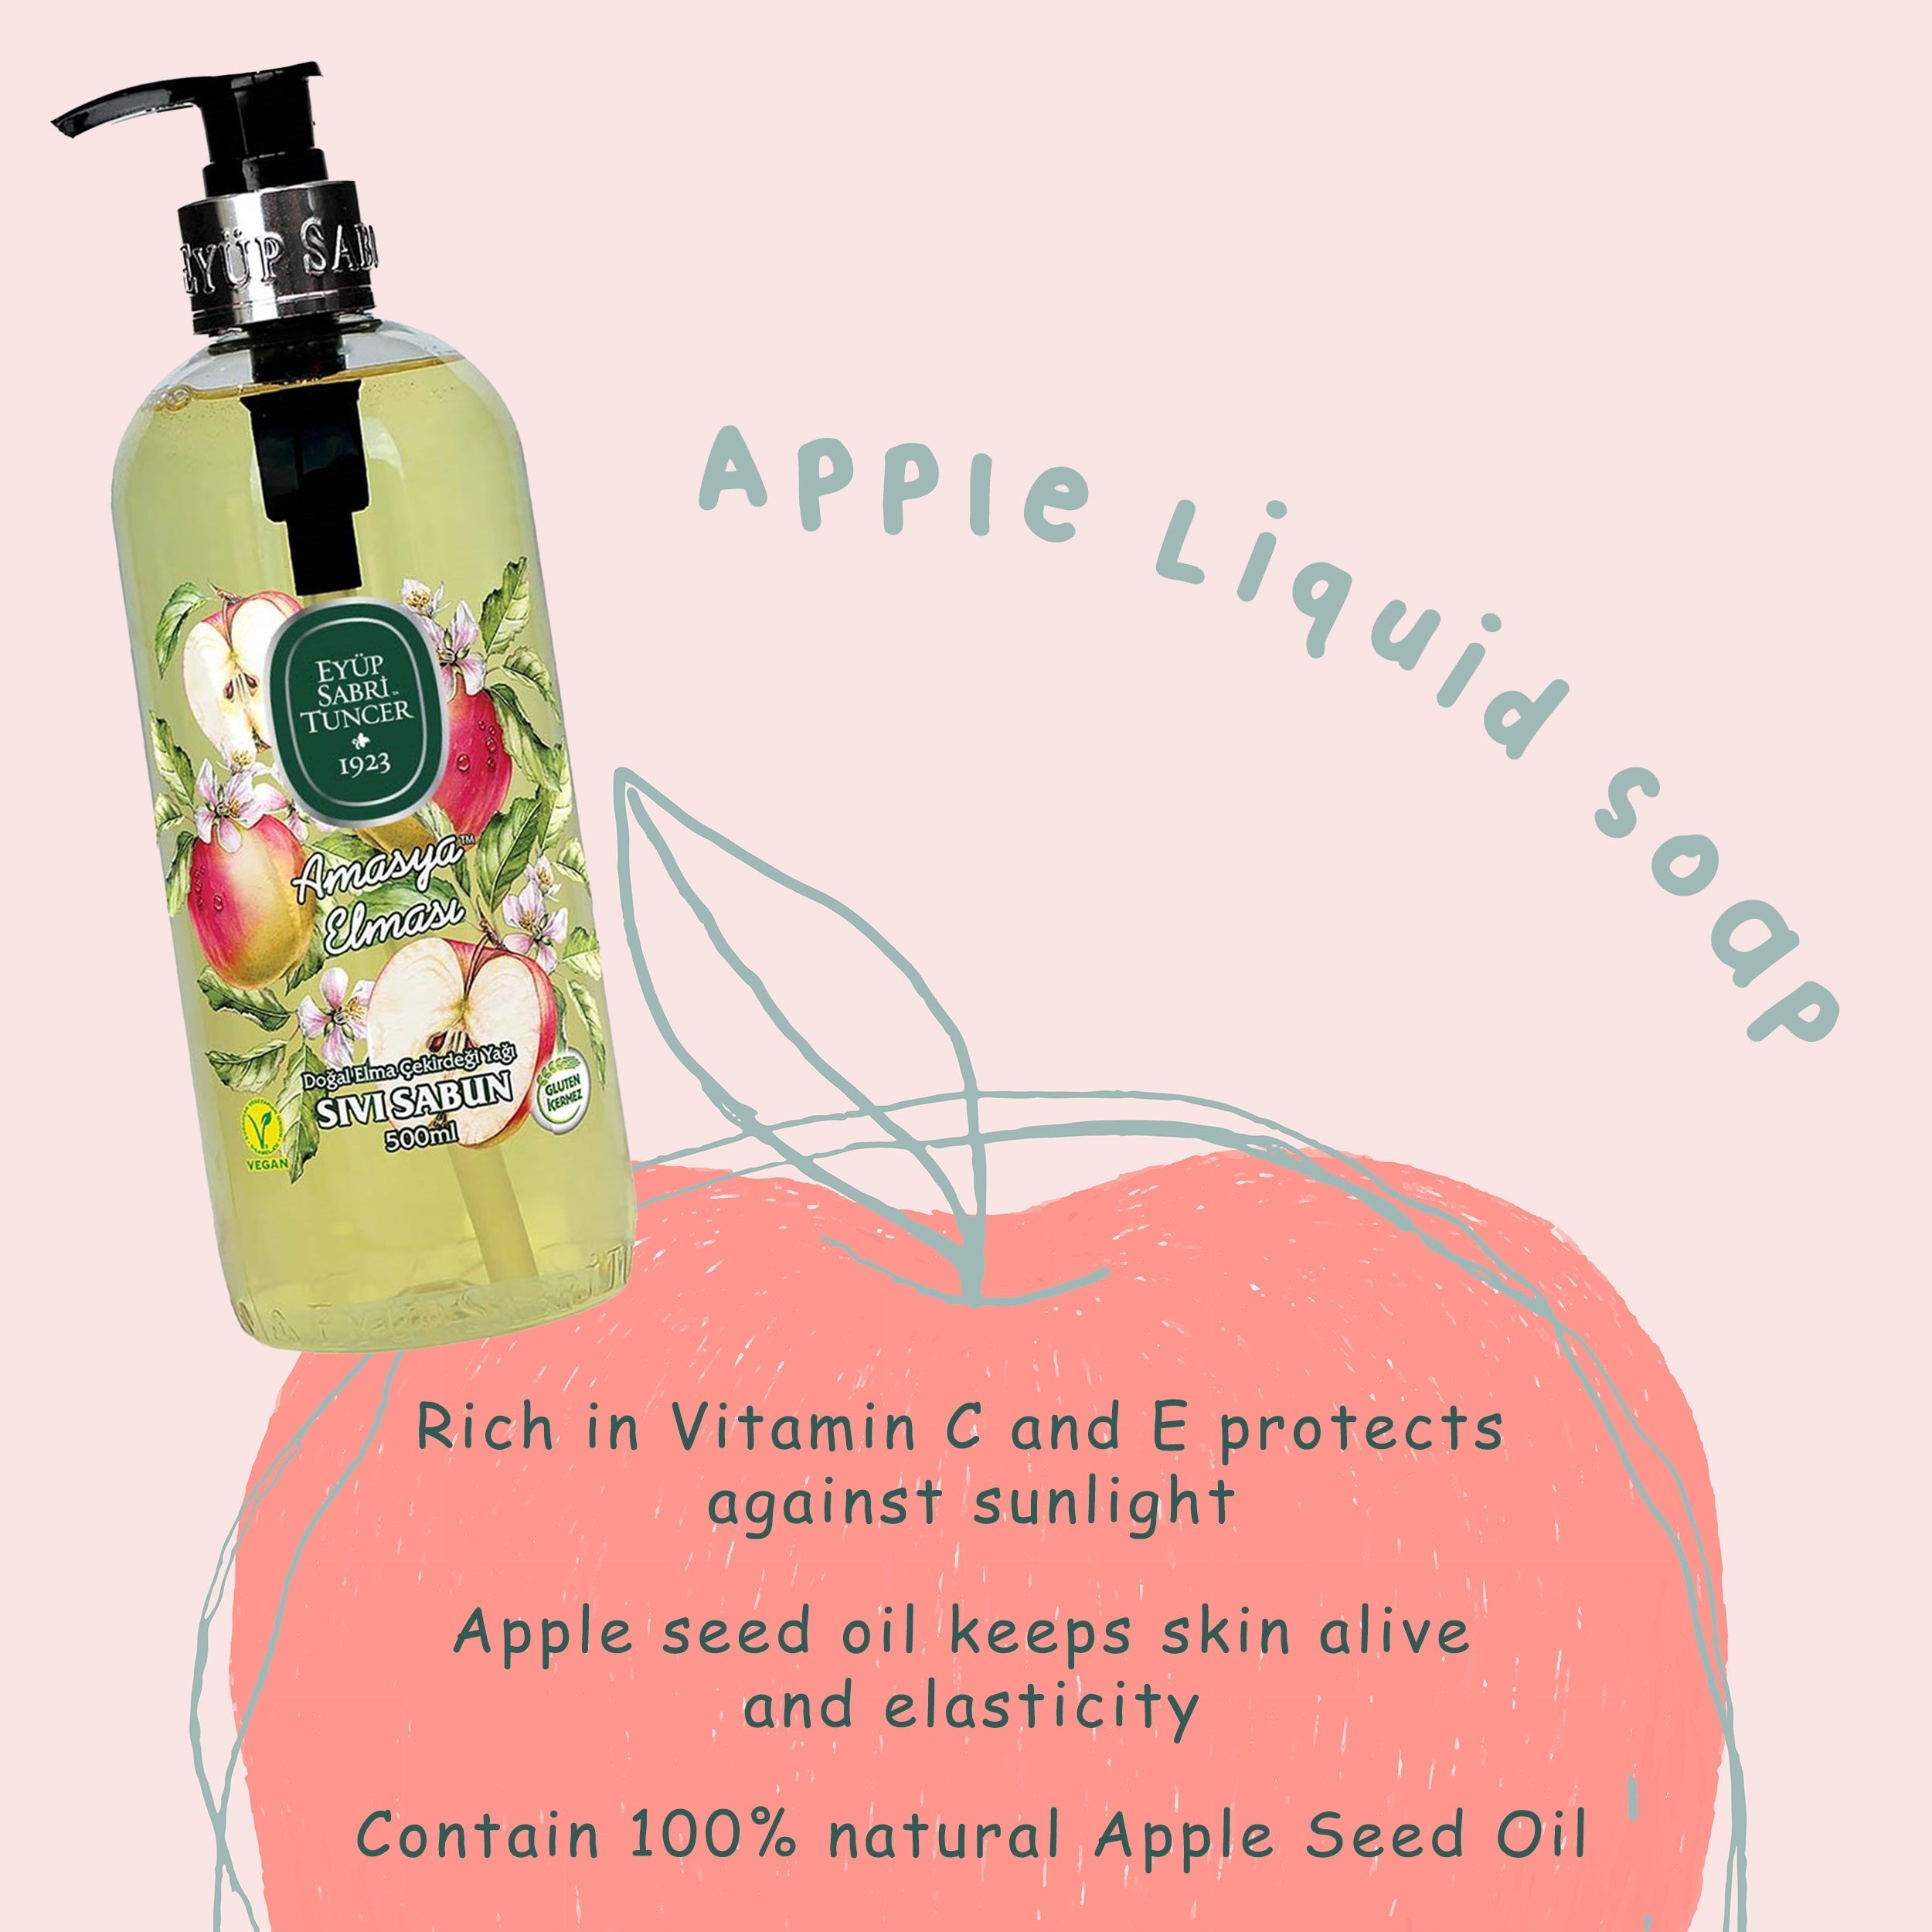 EYUP SABRI TUNCER [Buy 1 Free 1] Natural Olive Oil Liquid Soap - Apple 500ml | Isetan KL Online Store